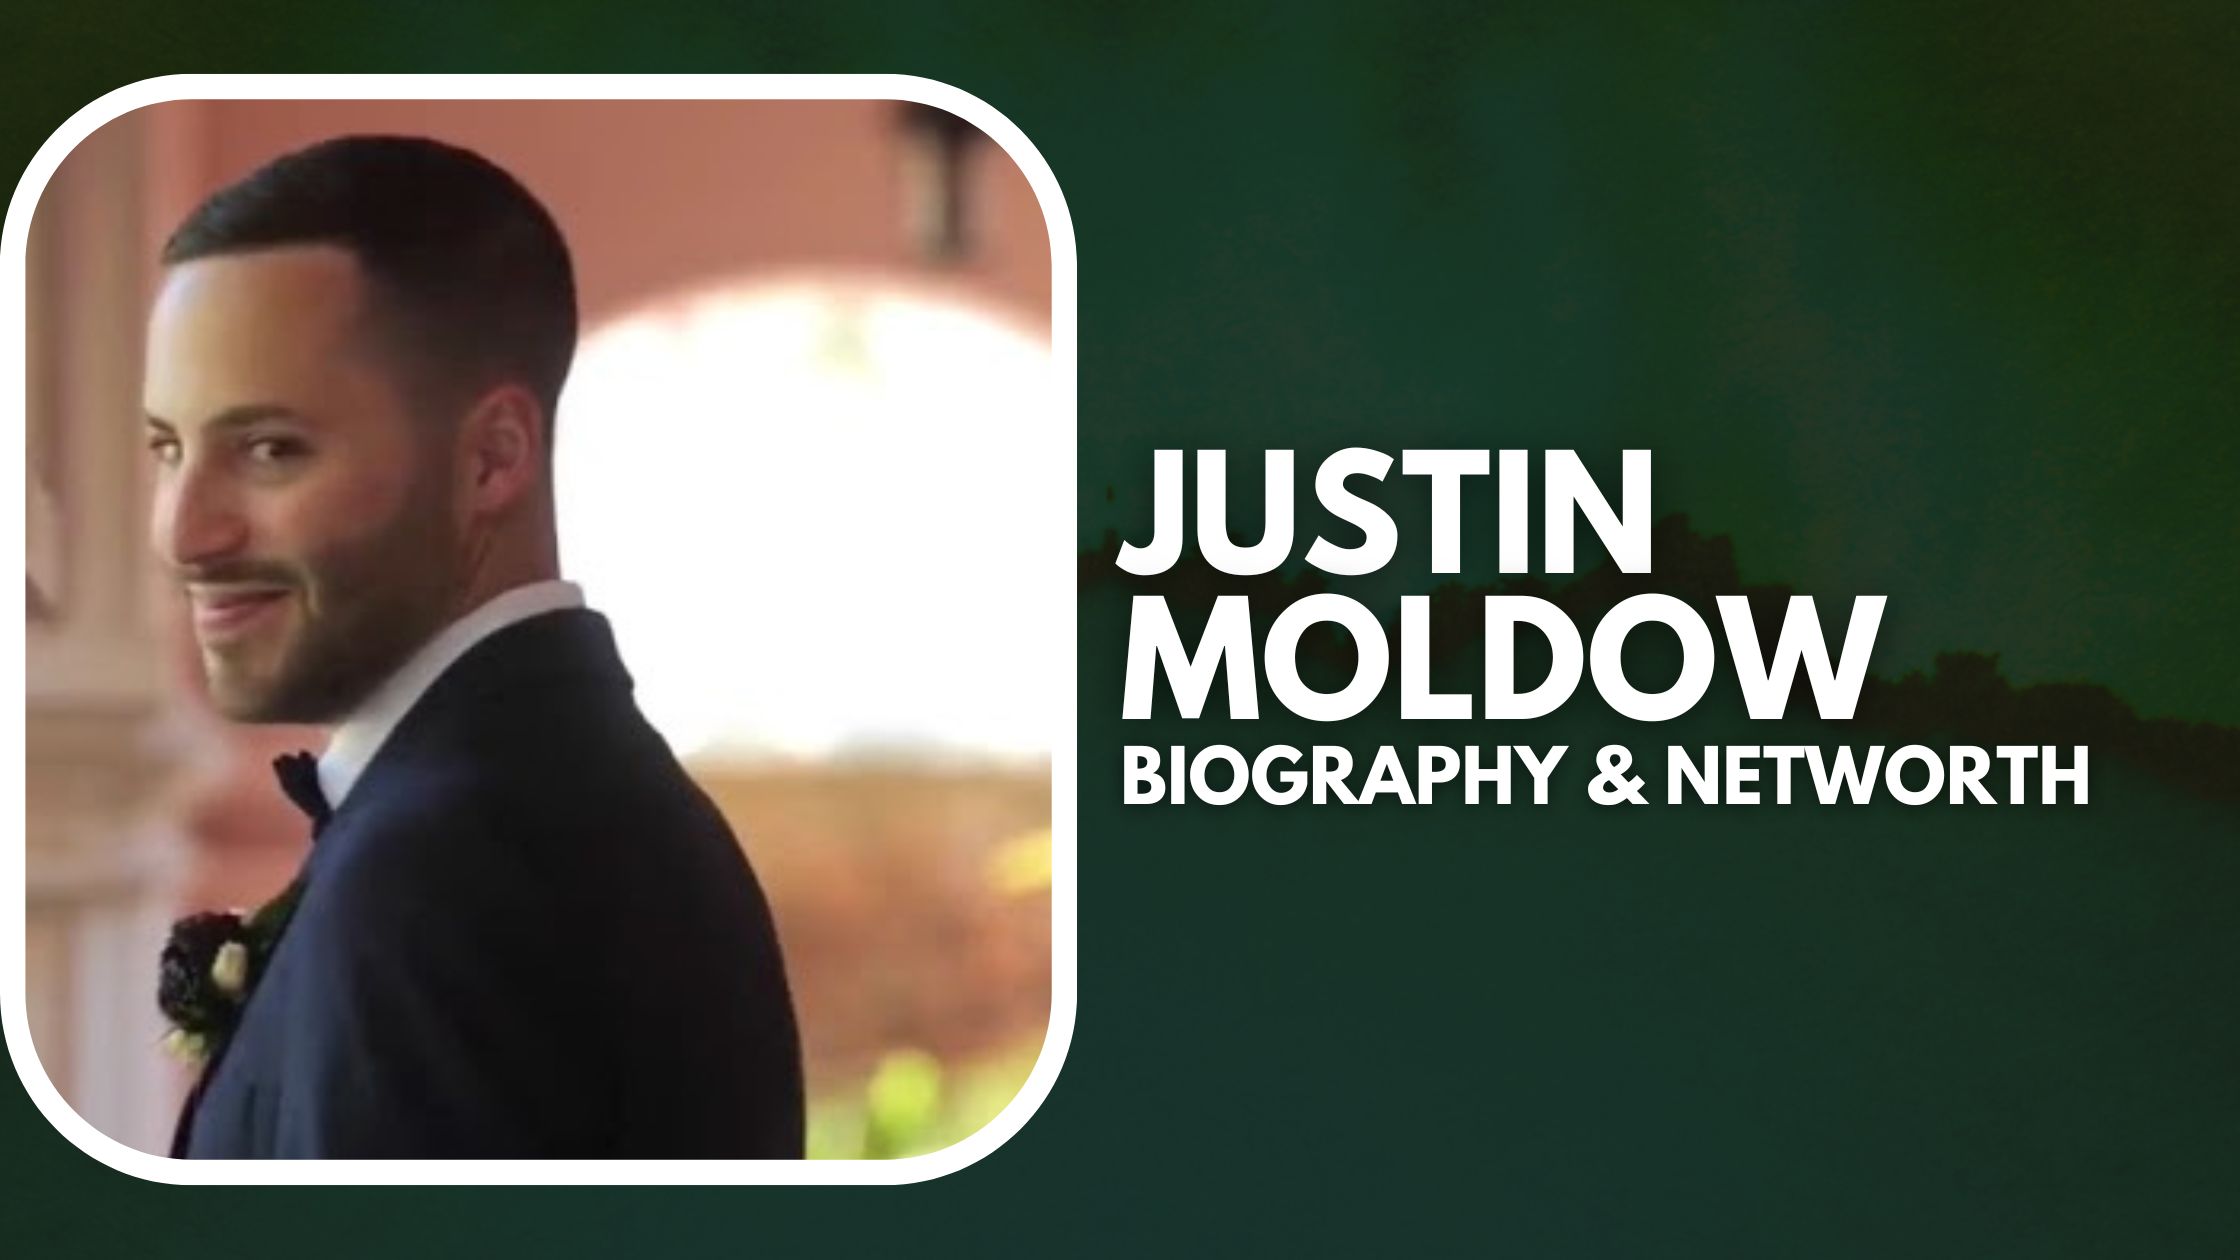 Justin Moldow biography & Networth